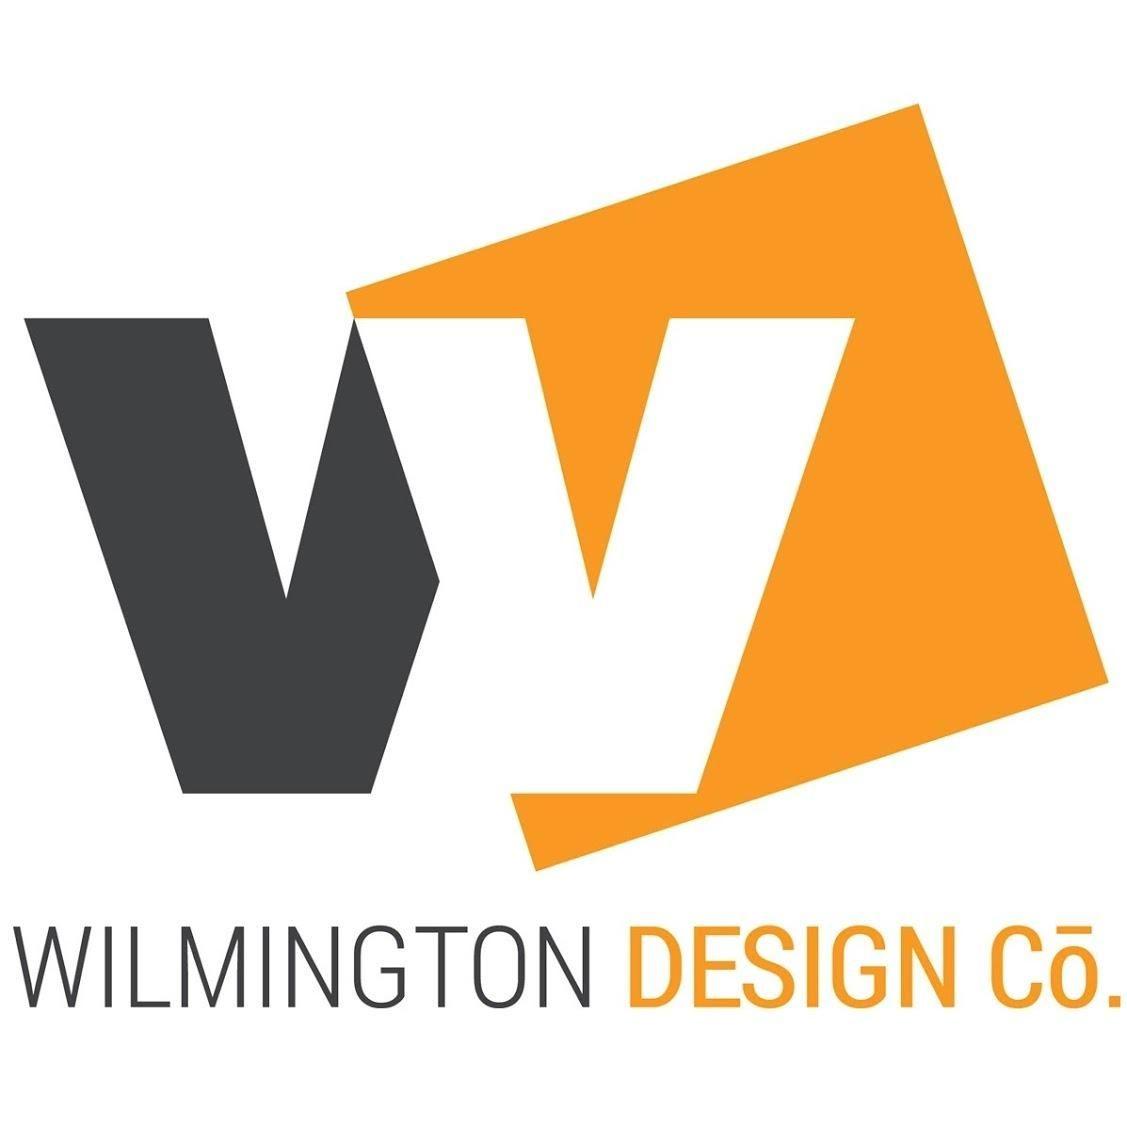 Design Company Logo - Logo Design, Branding & Graphic Design | National Award-Winning Designs